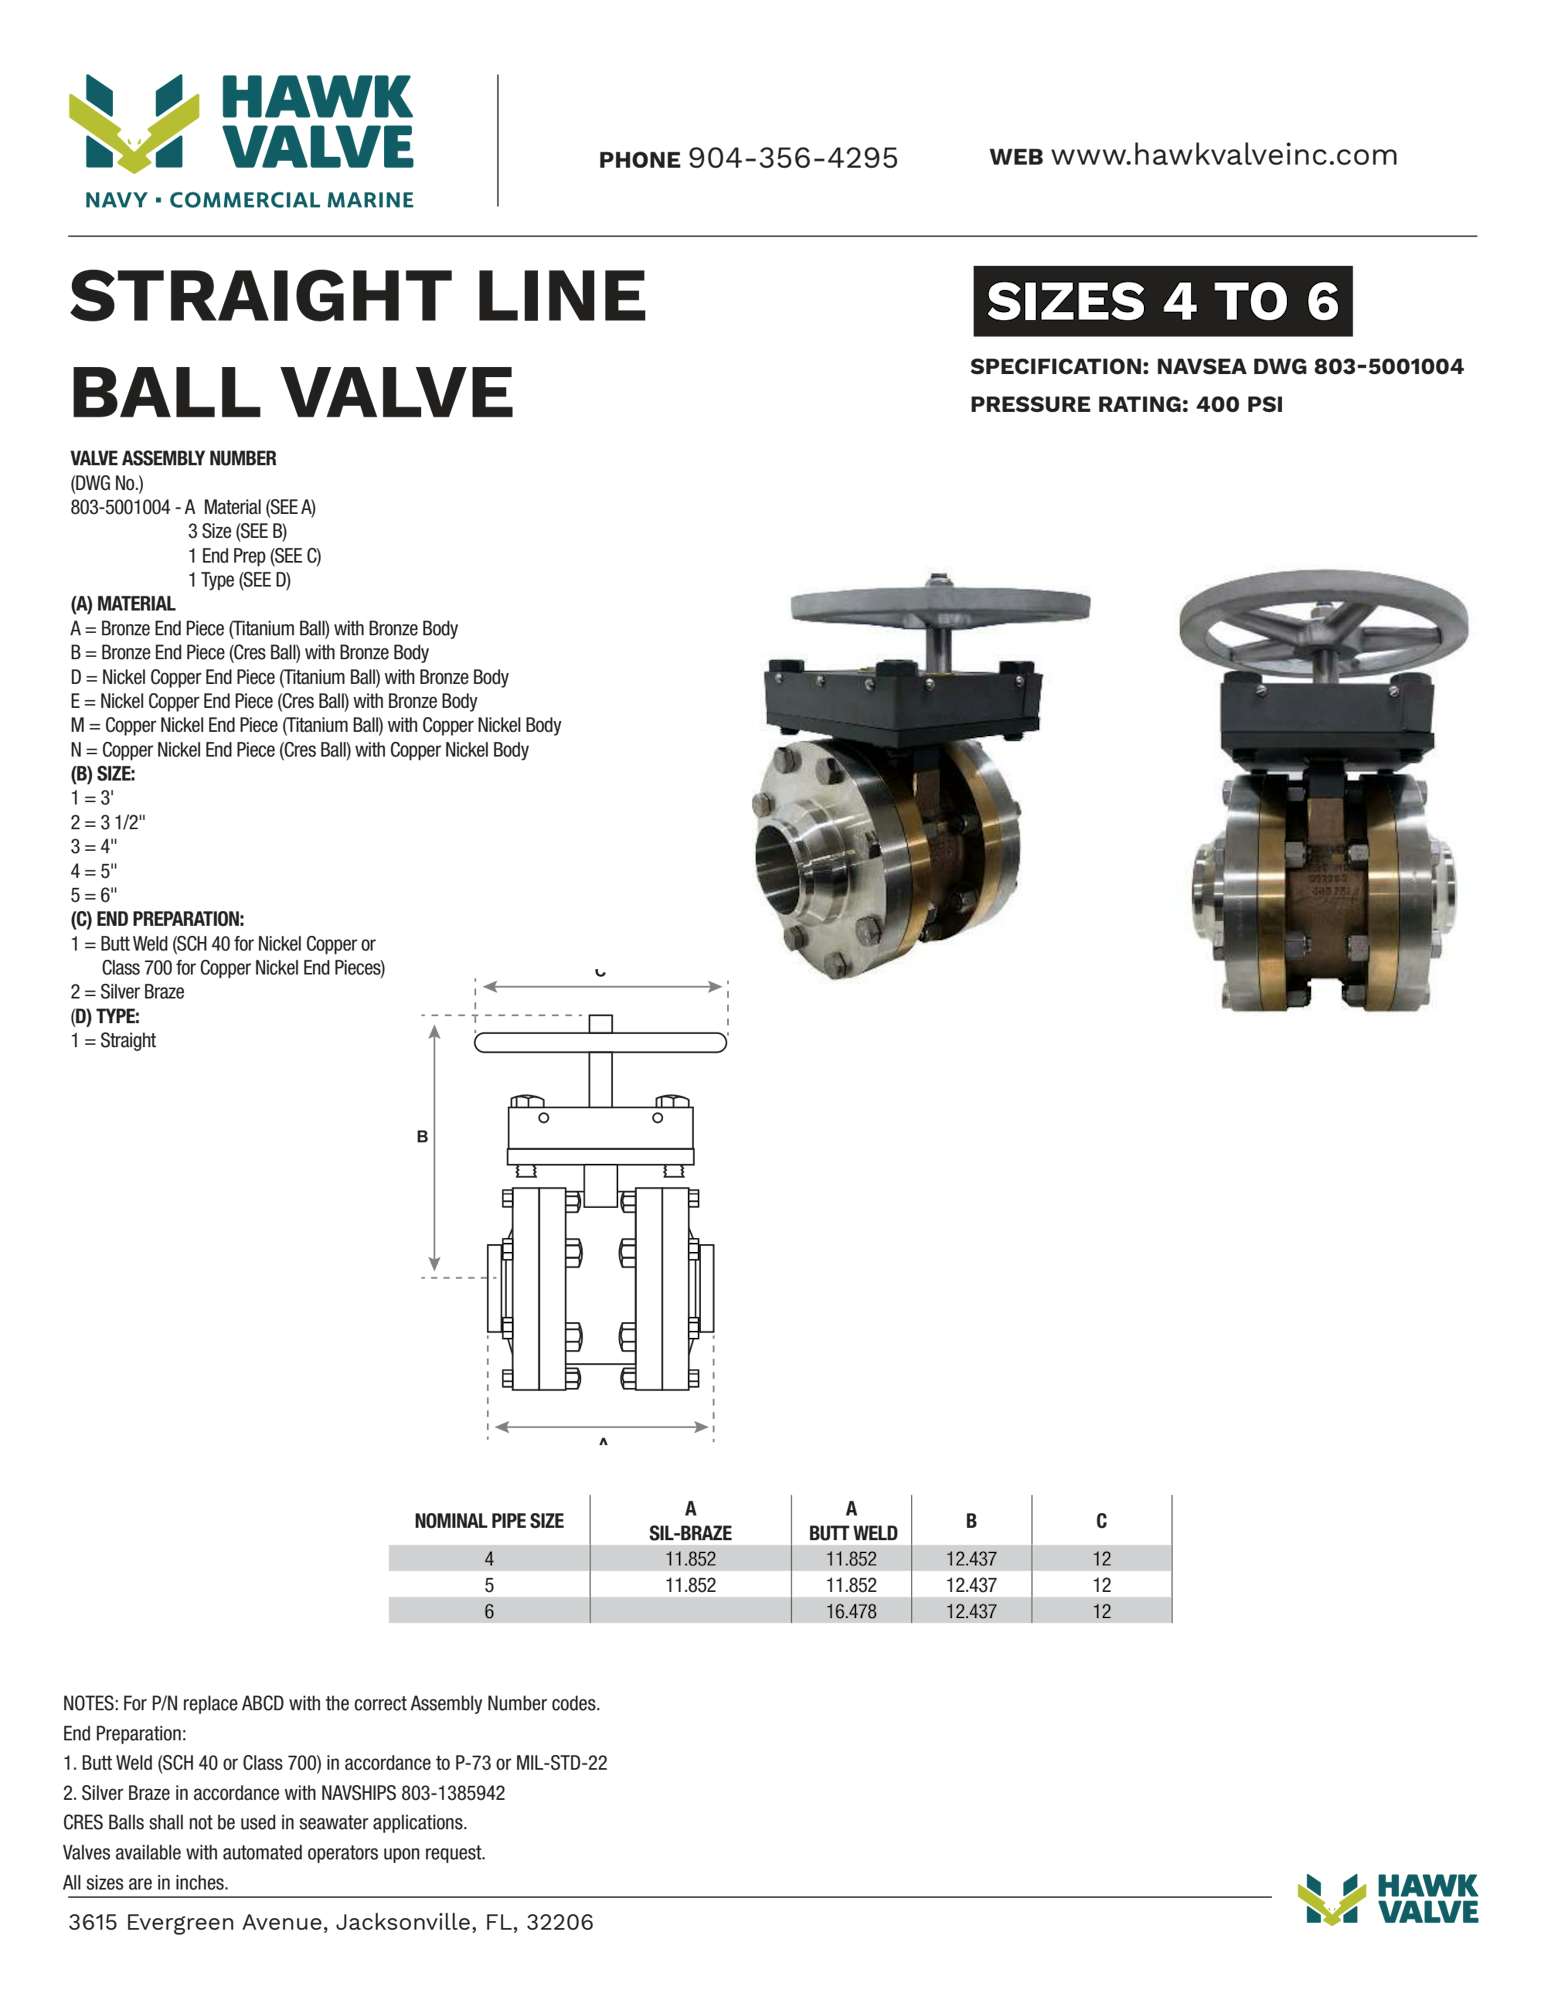 ball-valve-straight-line-4-6-1.pdf